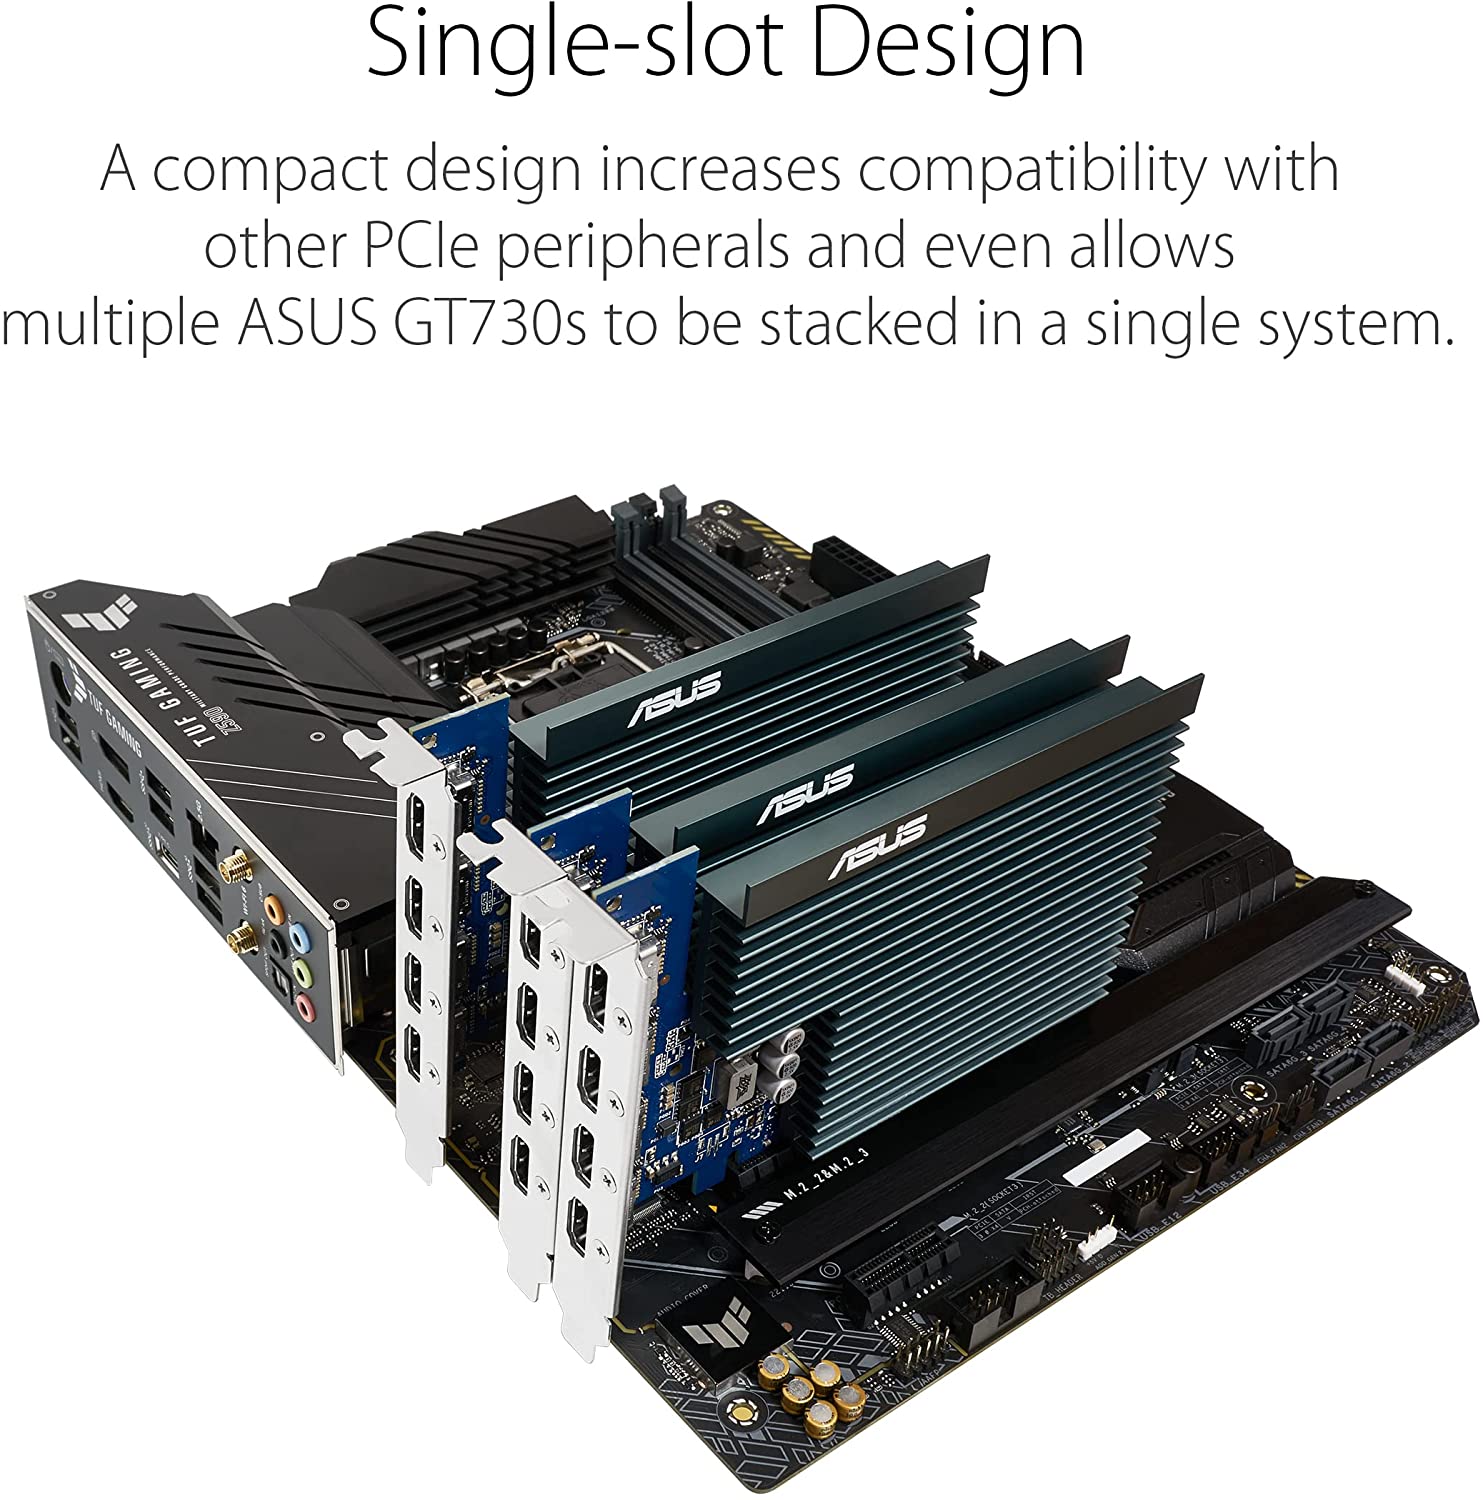 VD ASUS GEFORCE GT730 2GB SILENT 4 MONITOR PCIe